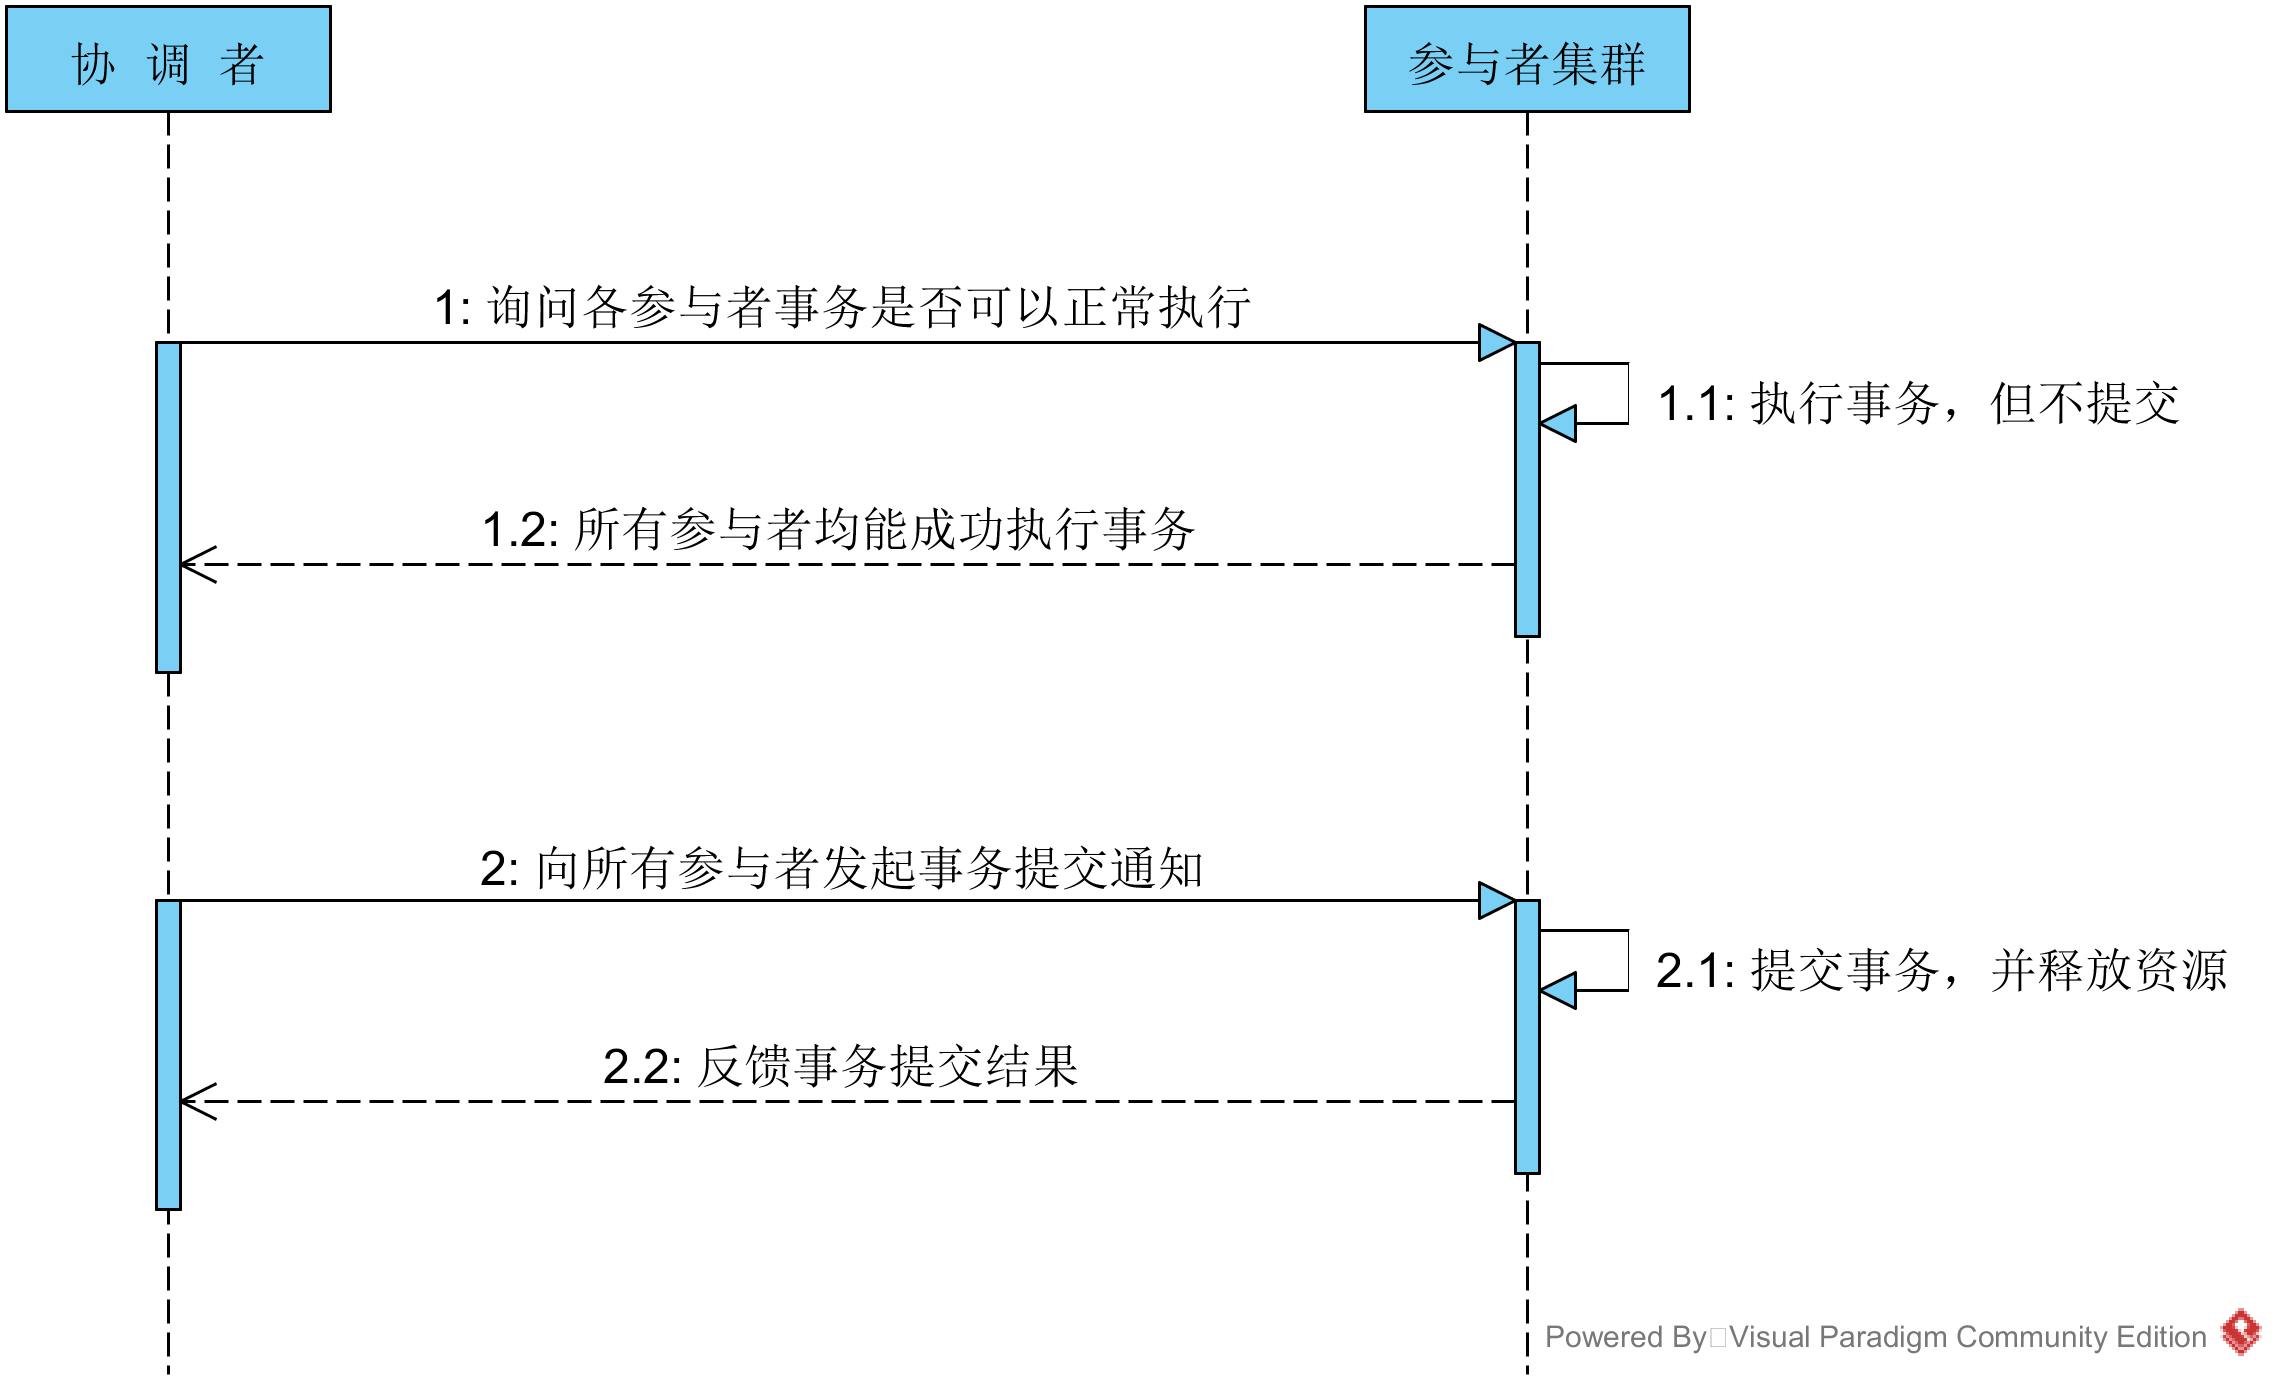 2PC 方案事务提交流程流程图